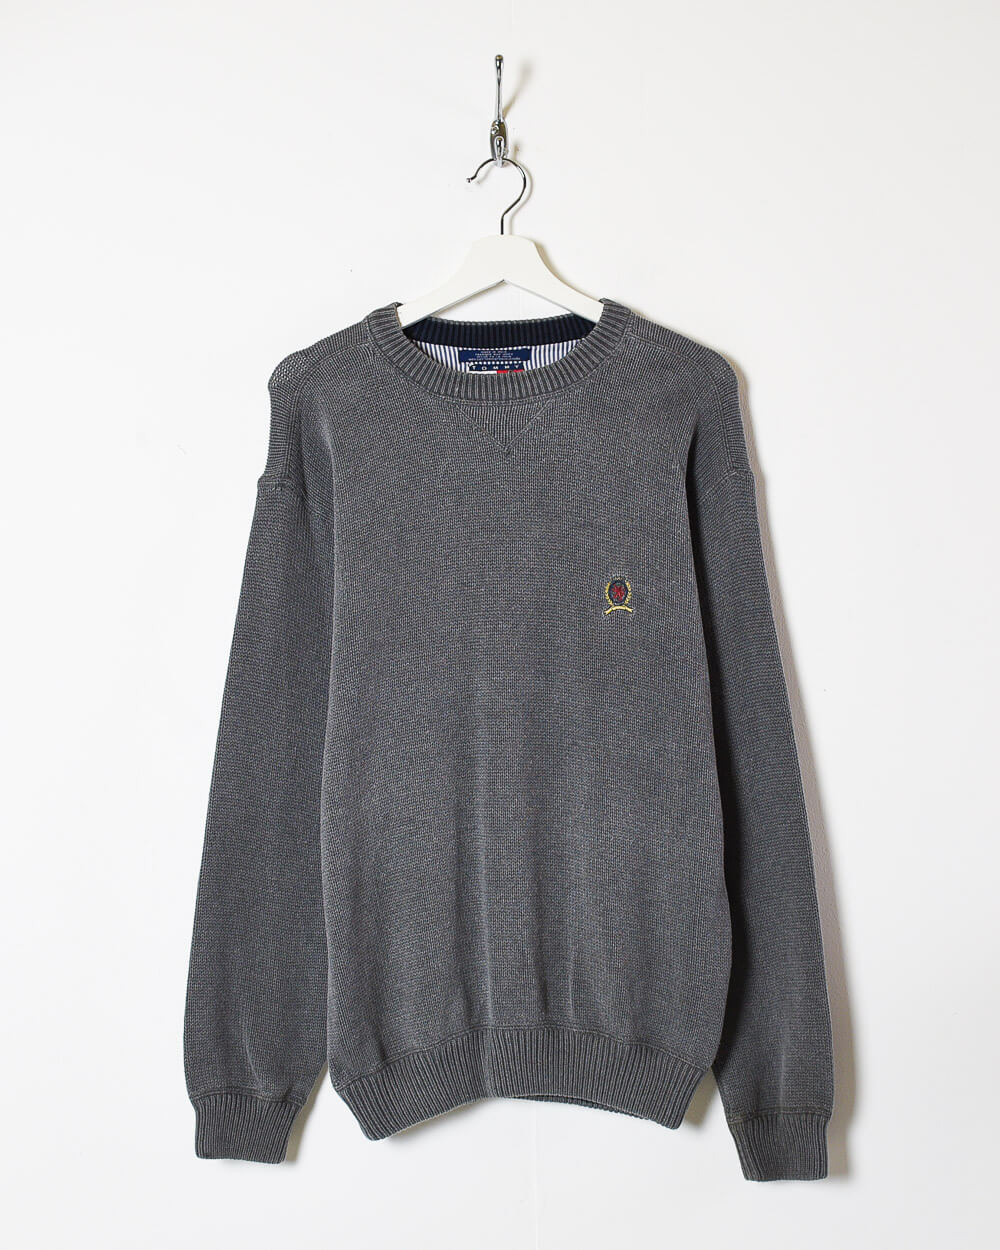 Stone Tommy Hilfiger Knitted Sweatshirt - Medium